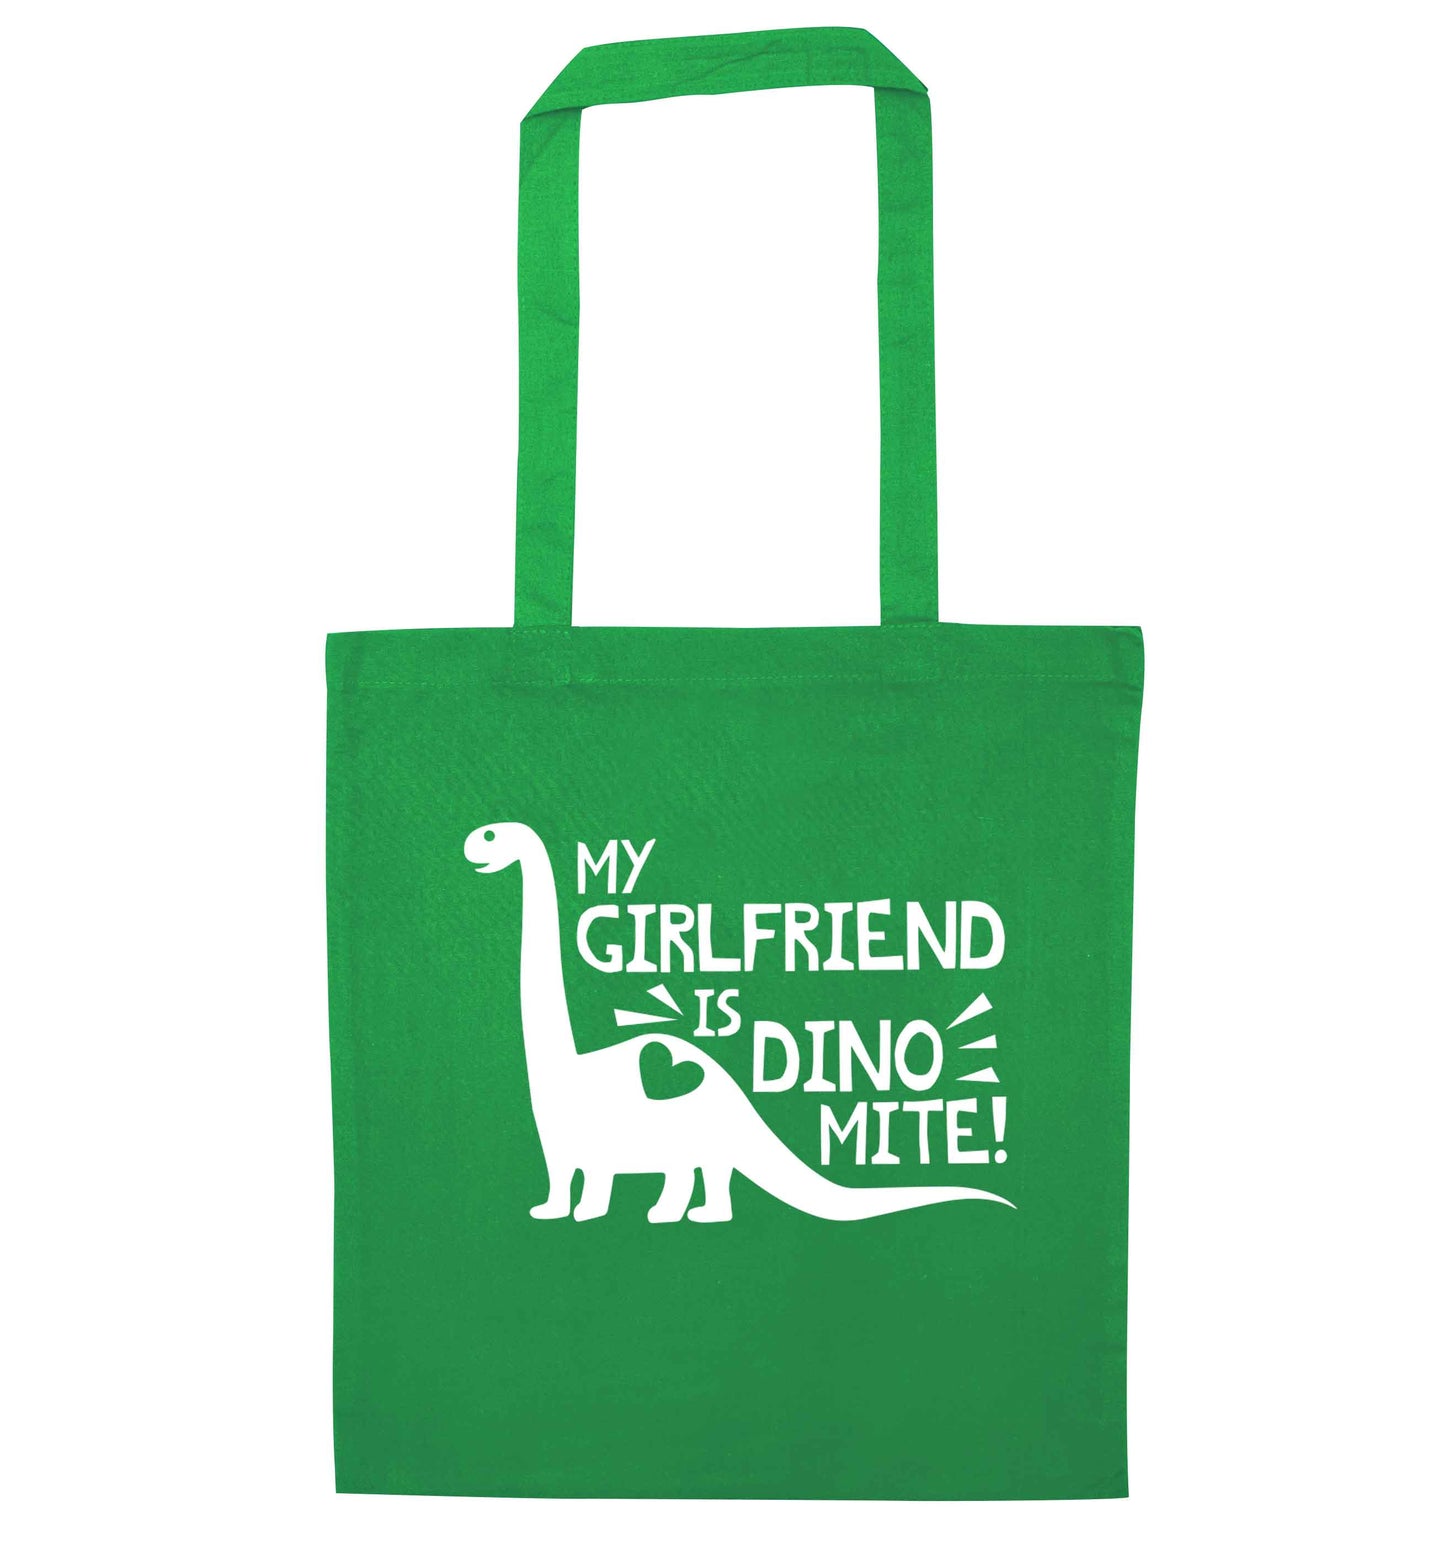 My girlfriend is dinomite! green tote bag